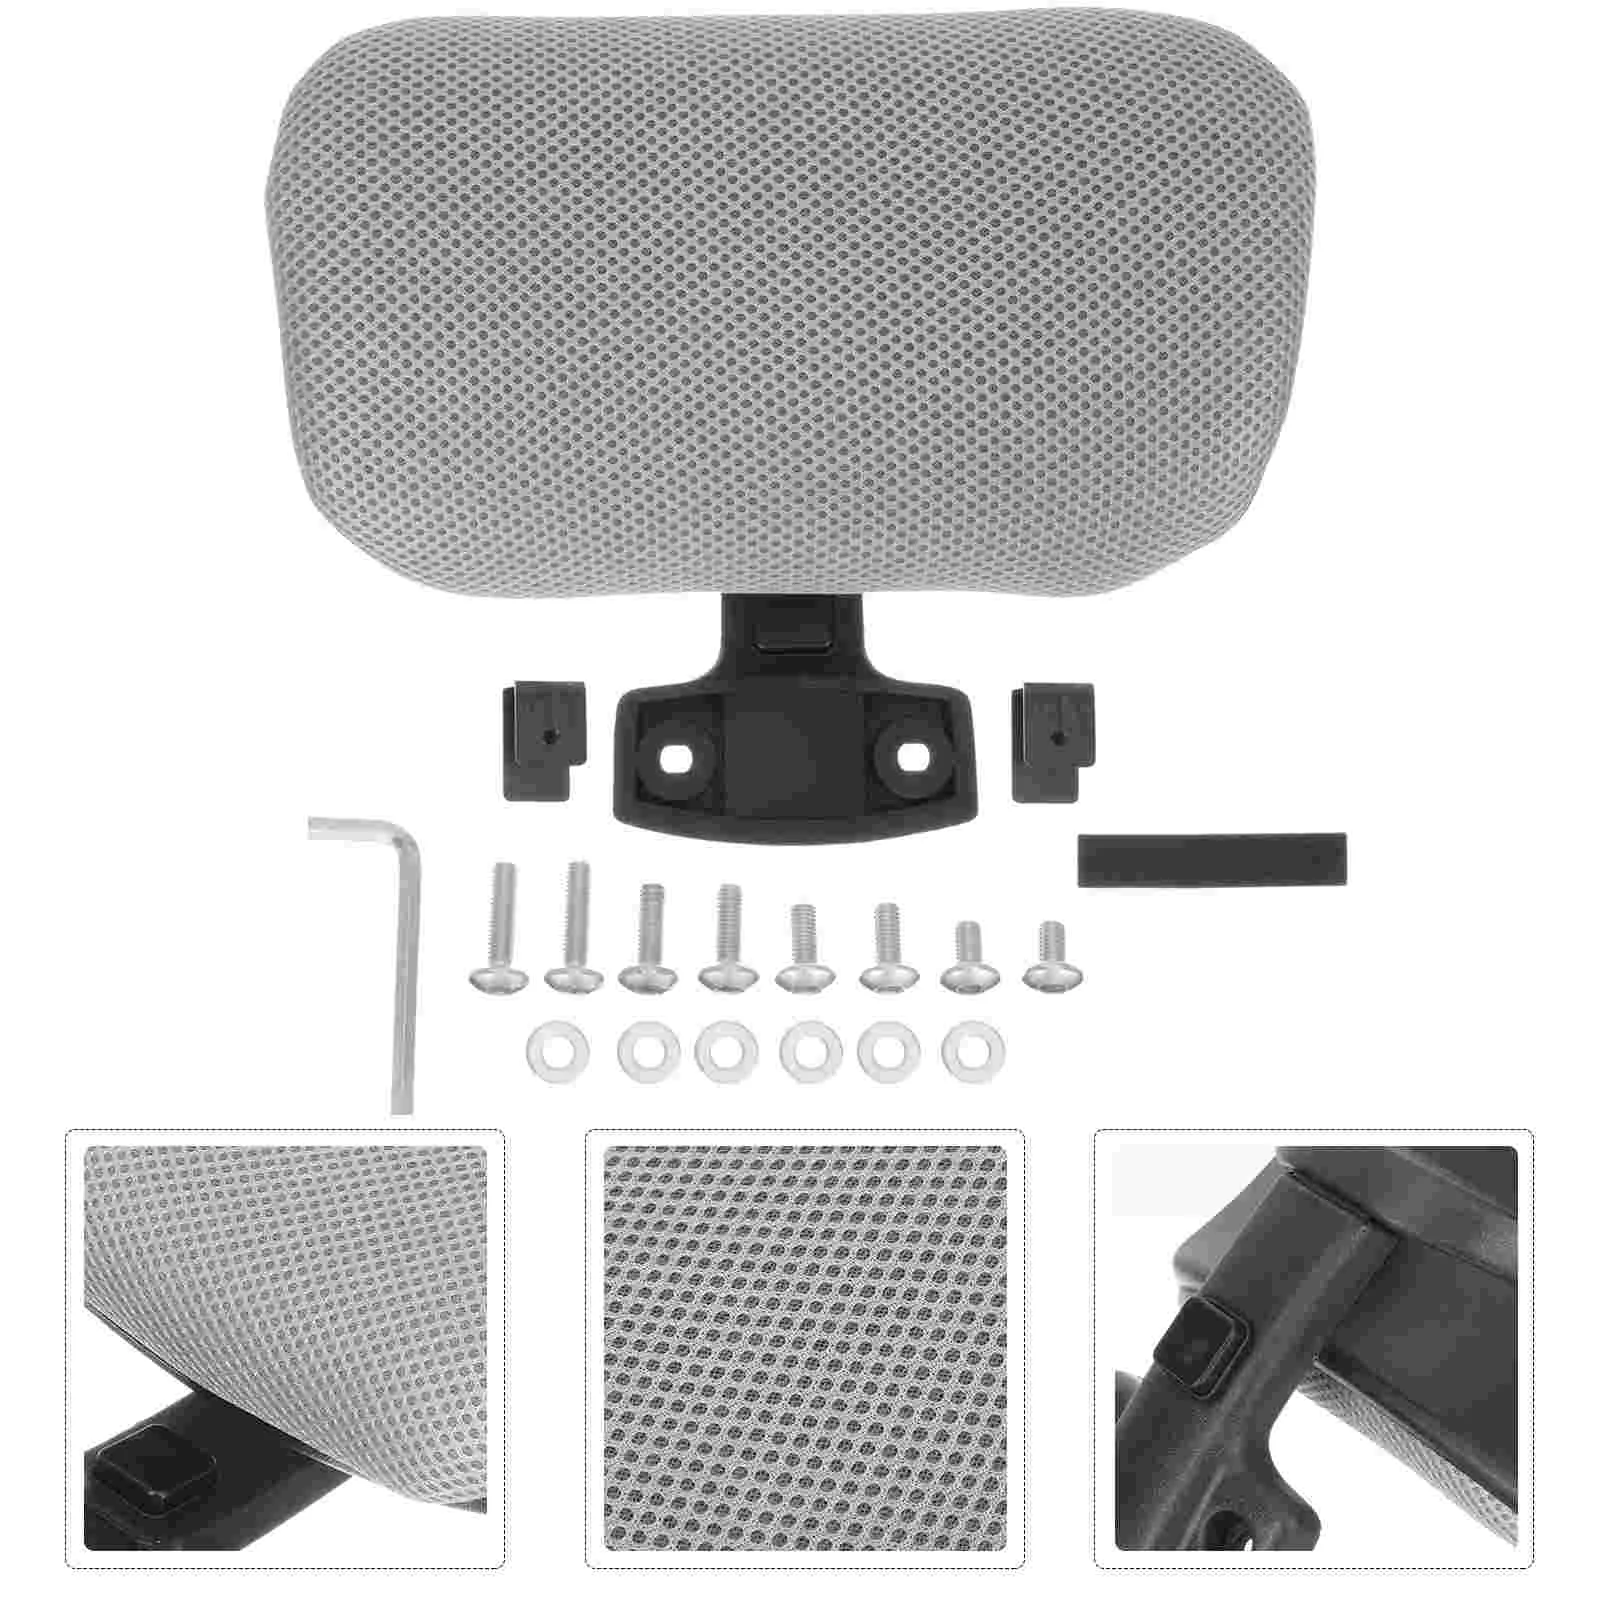 

Veemoon Ergonomic Desk Chair Headrest Attachment Head Support Cushion Elastic Sponge Head Pillow Adjustable Height